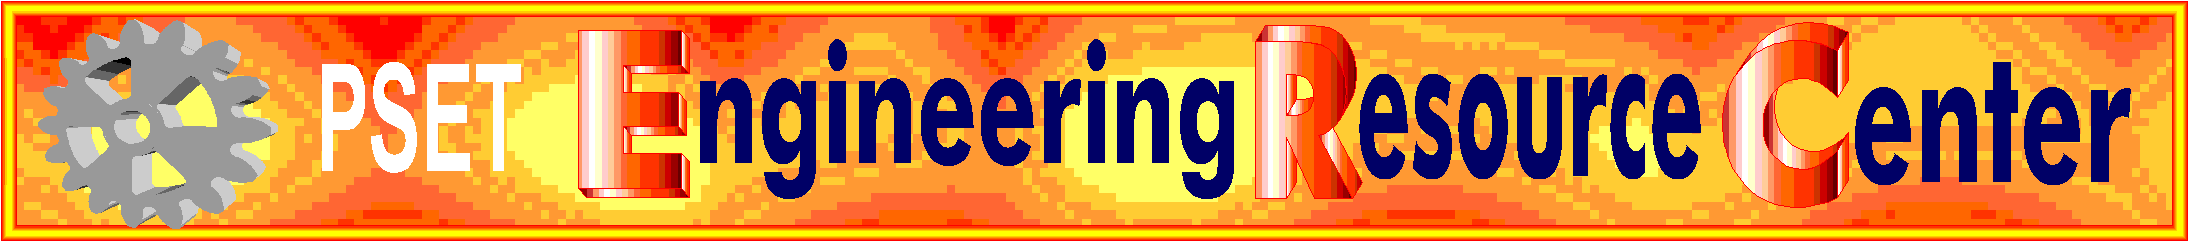 Engineering Resource Center logo